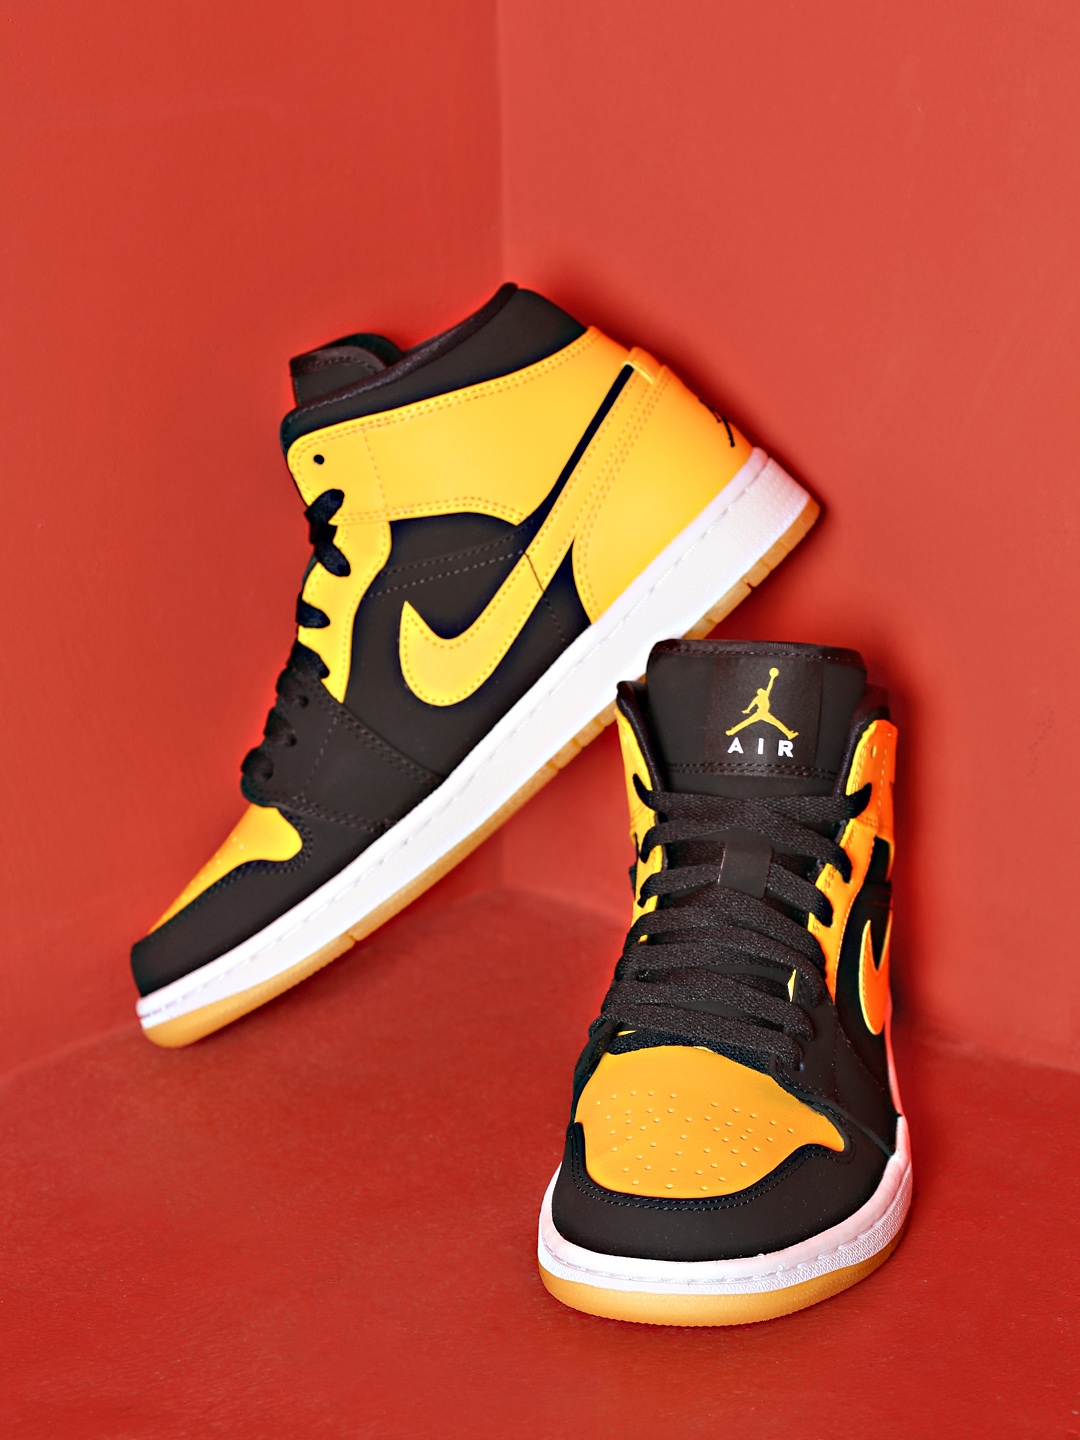 nike jordan shoes black and yellow